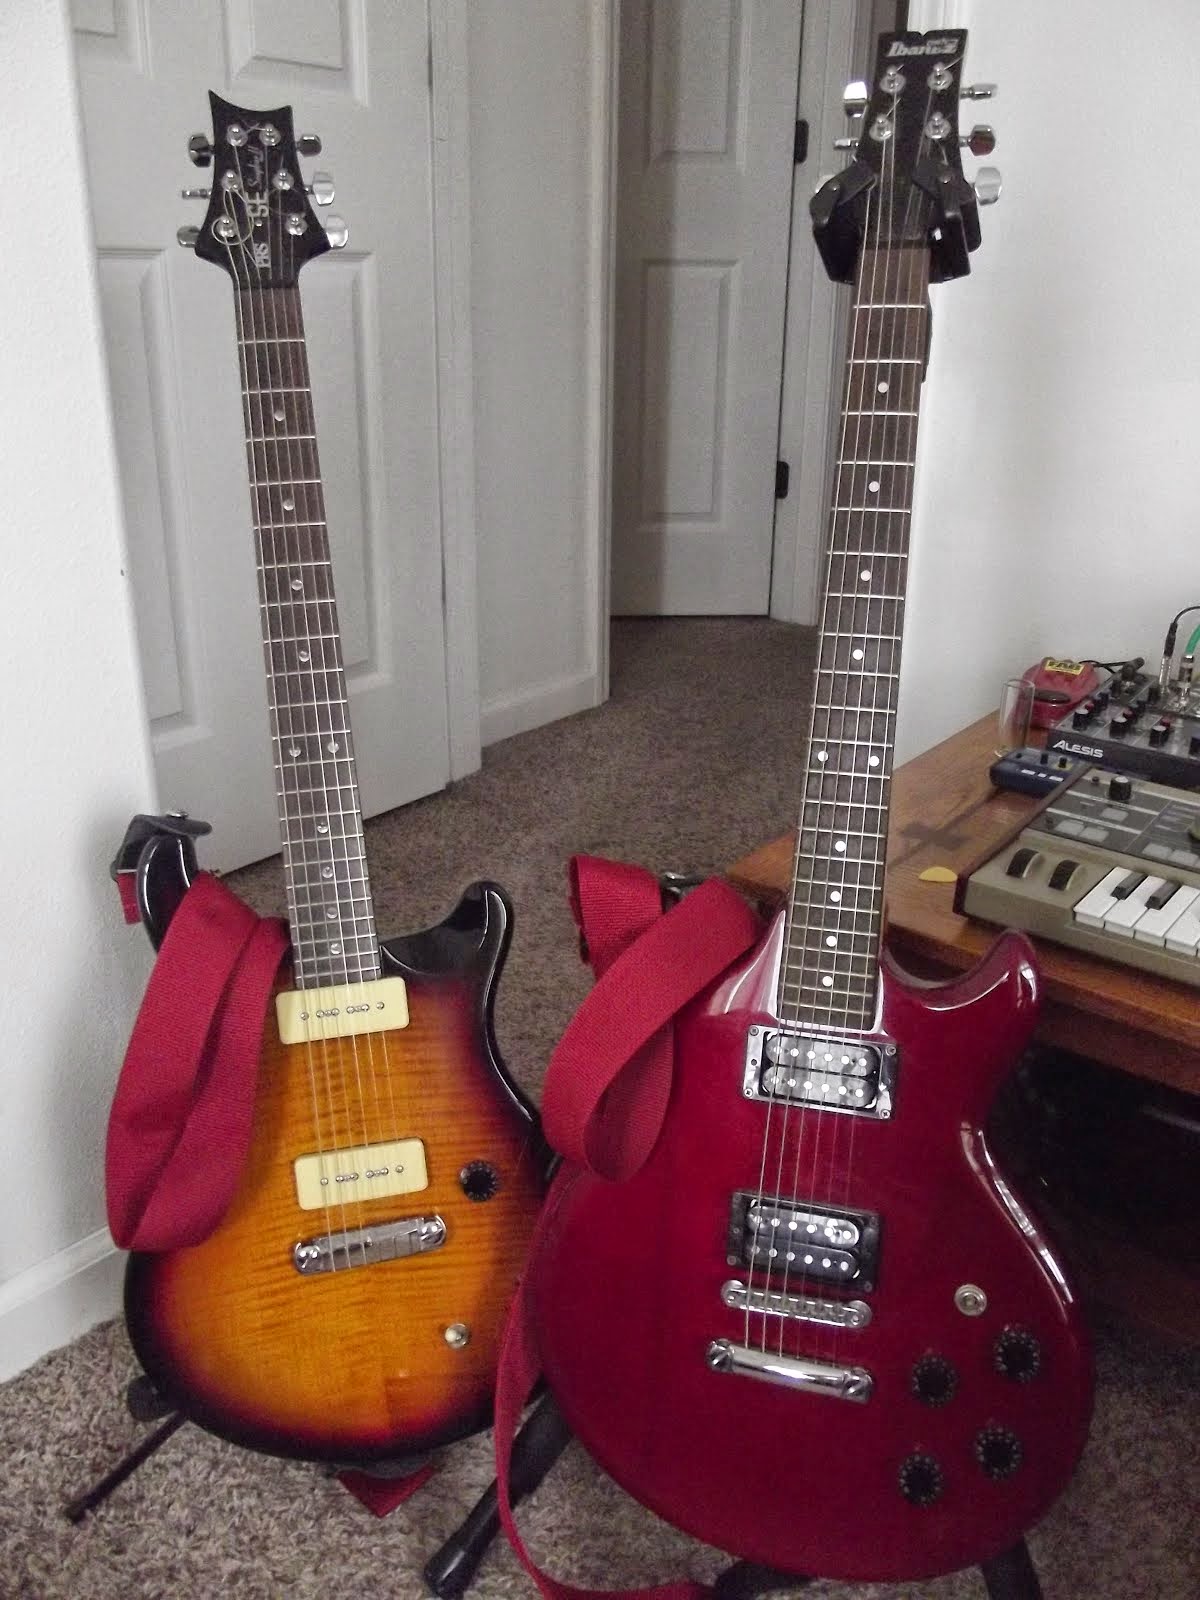 the guitars